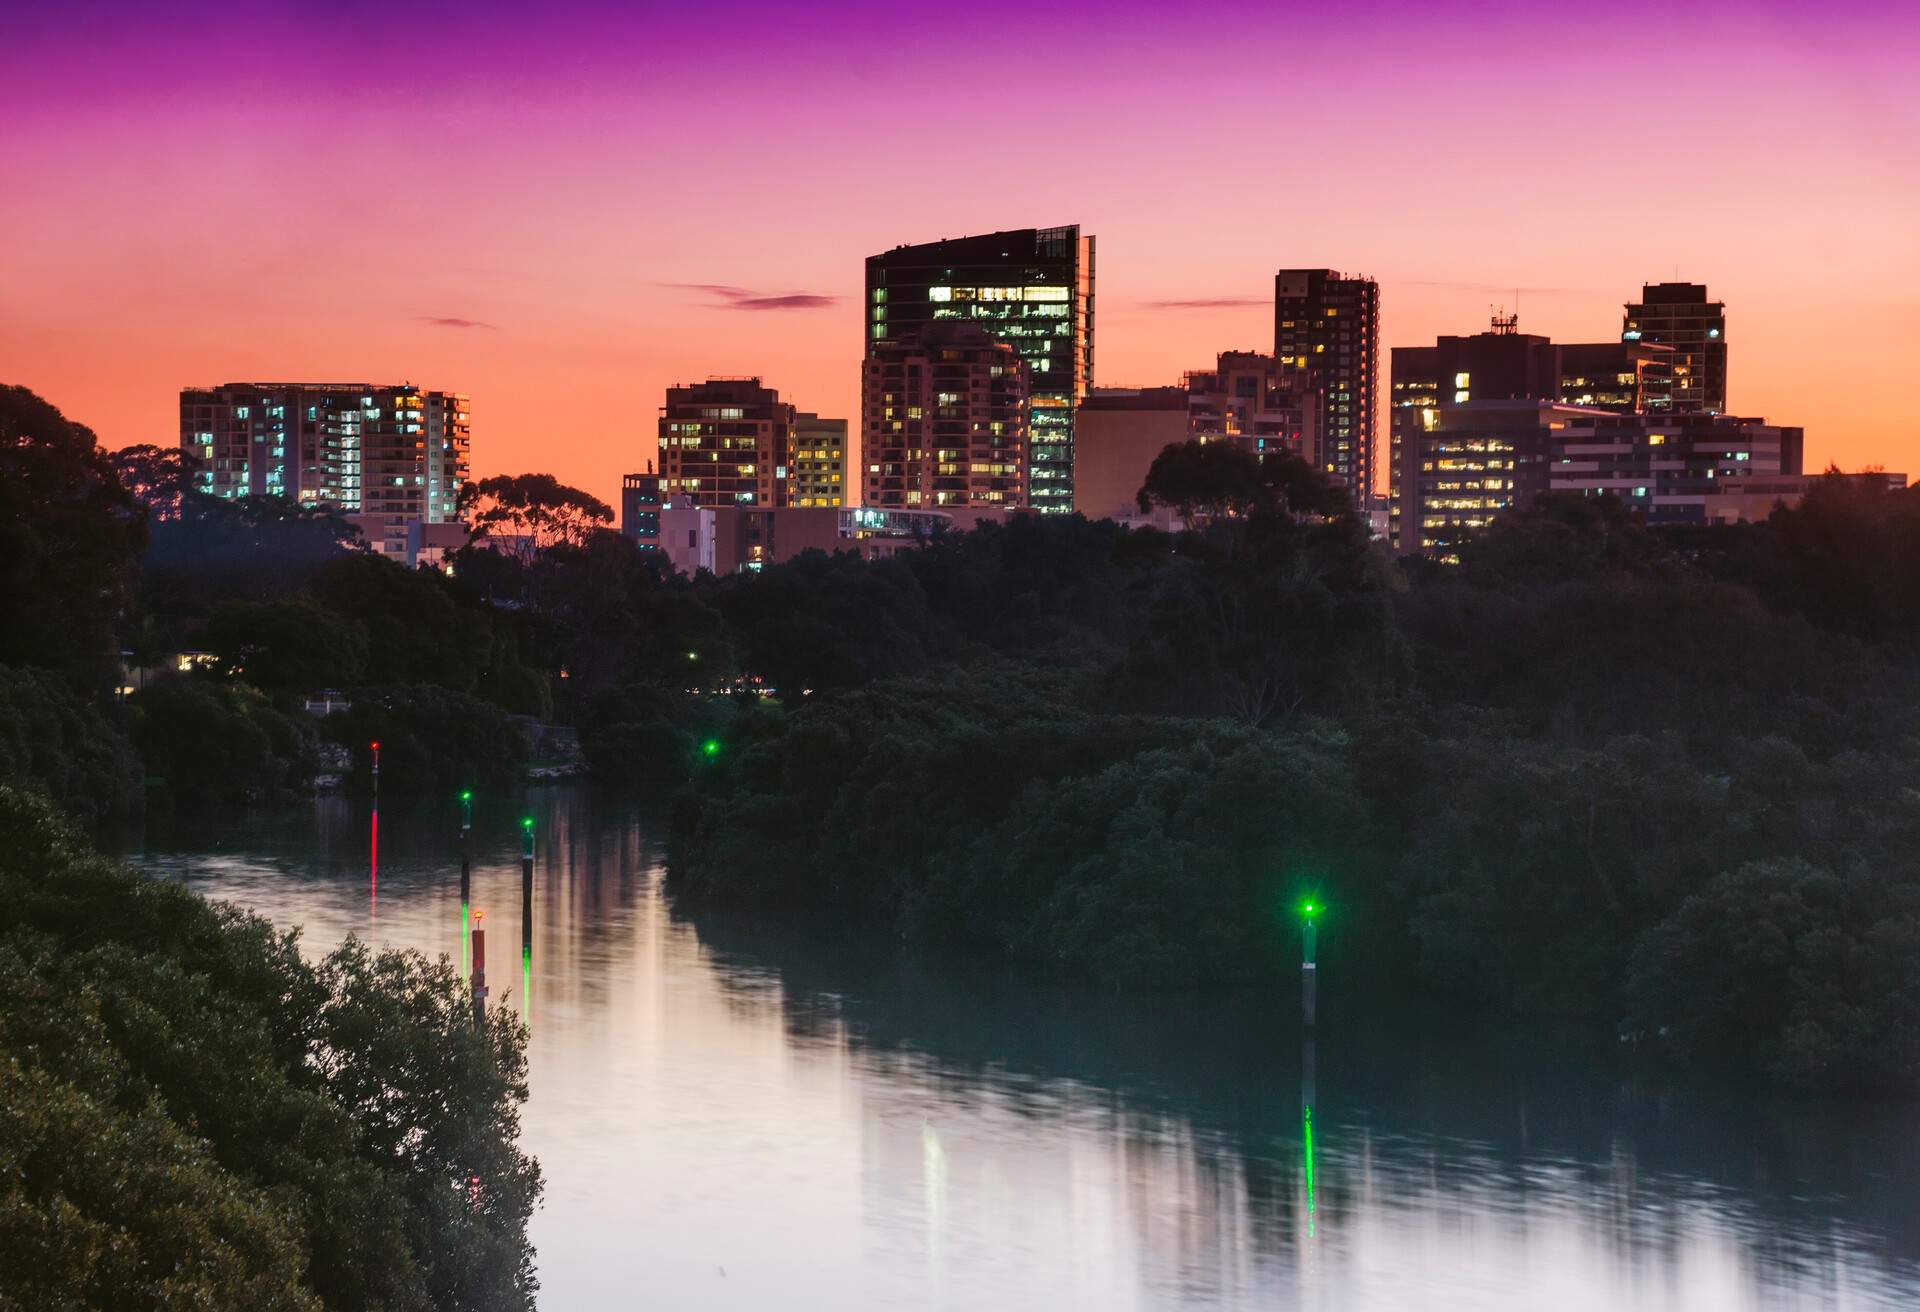 Parramatta CBD at dusk, with the Parramatta River before it.